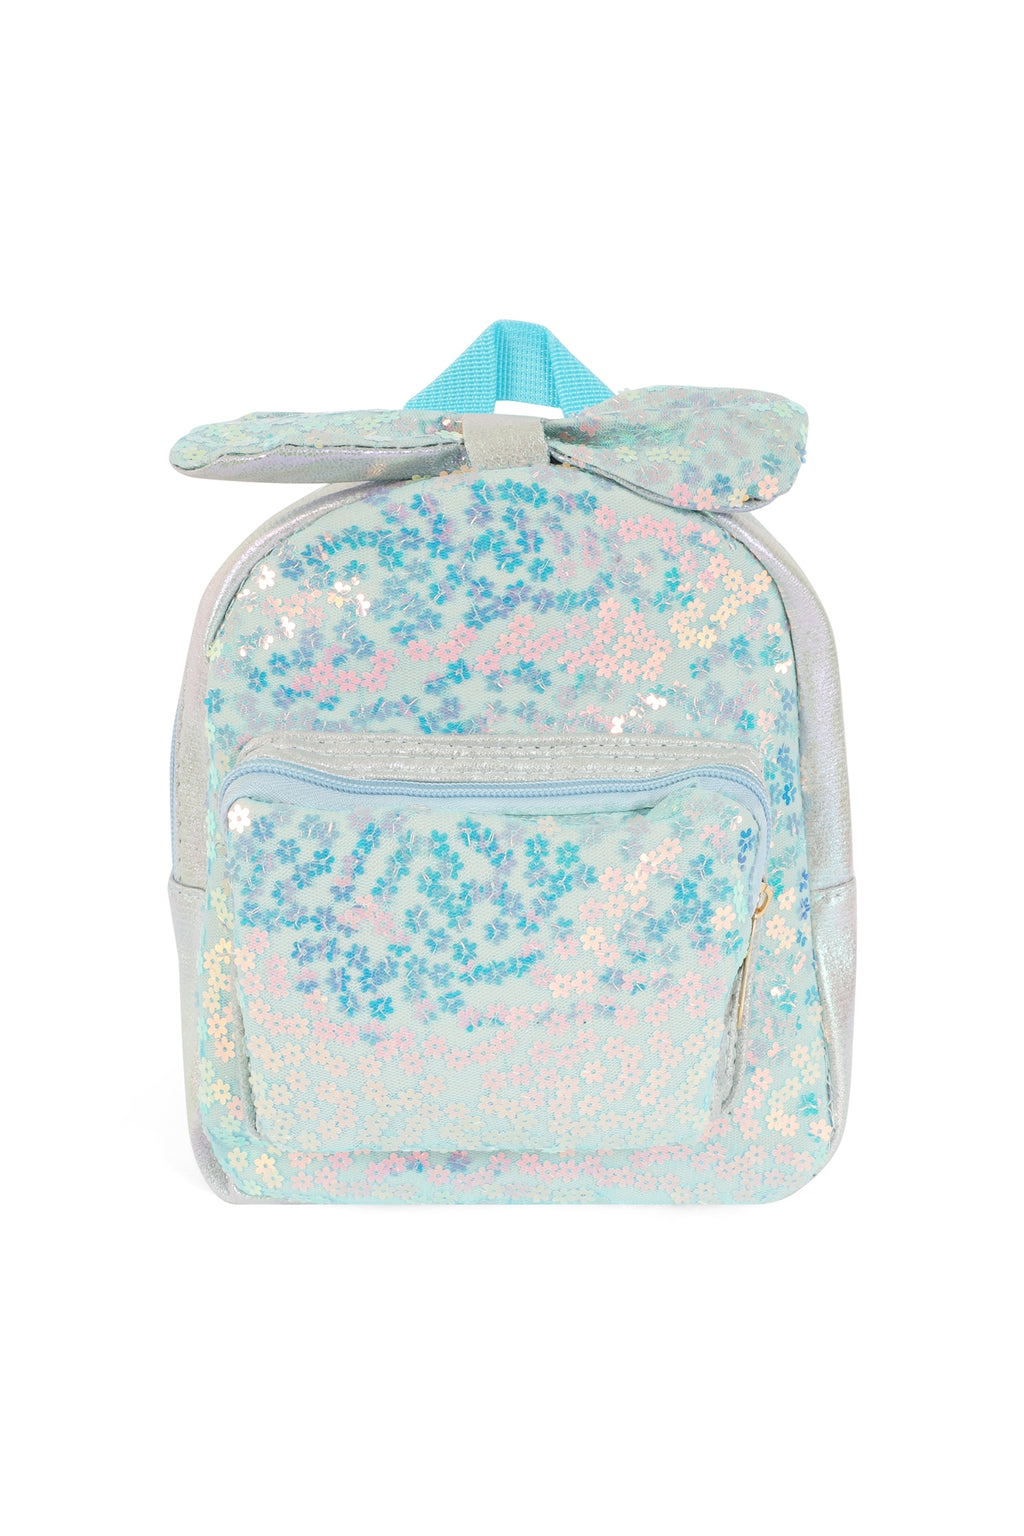 Cute Bow Glitter Kids Backpack Blue - Pack of 6